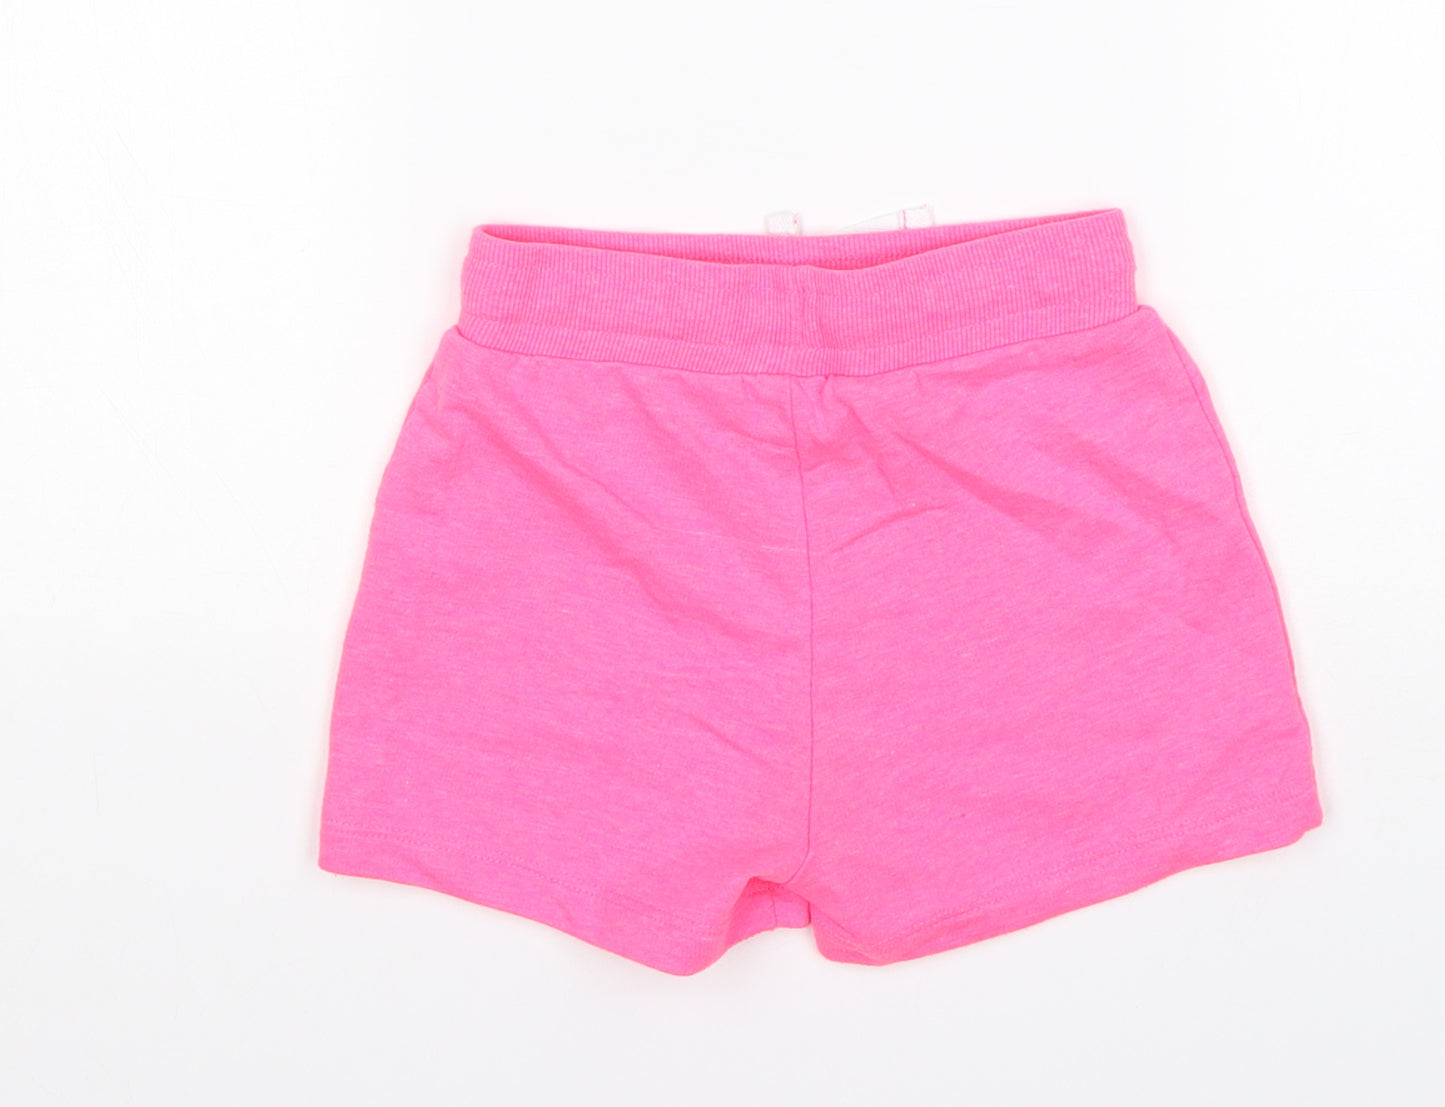 George Girls Pink  Polyester Sweat Shorts Size 5-6 Years  Regular